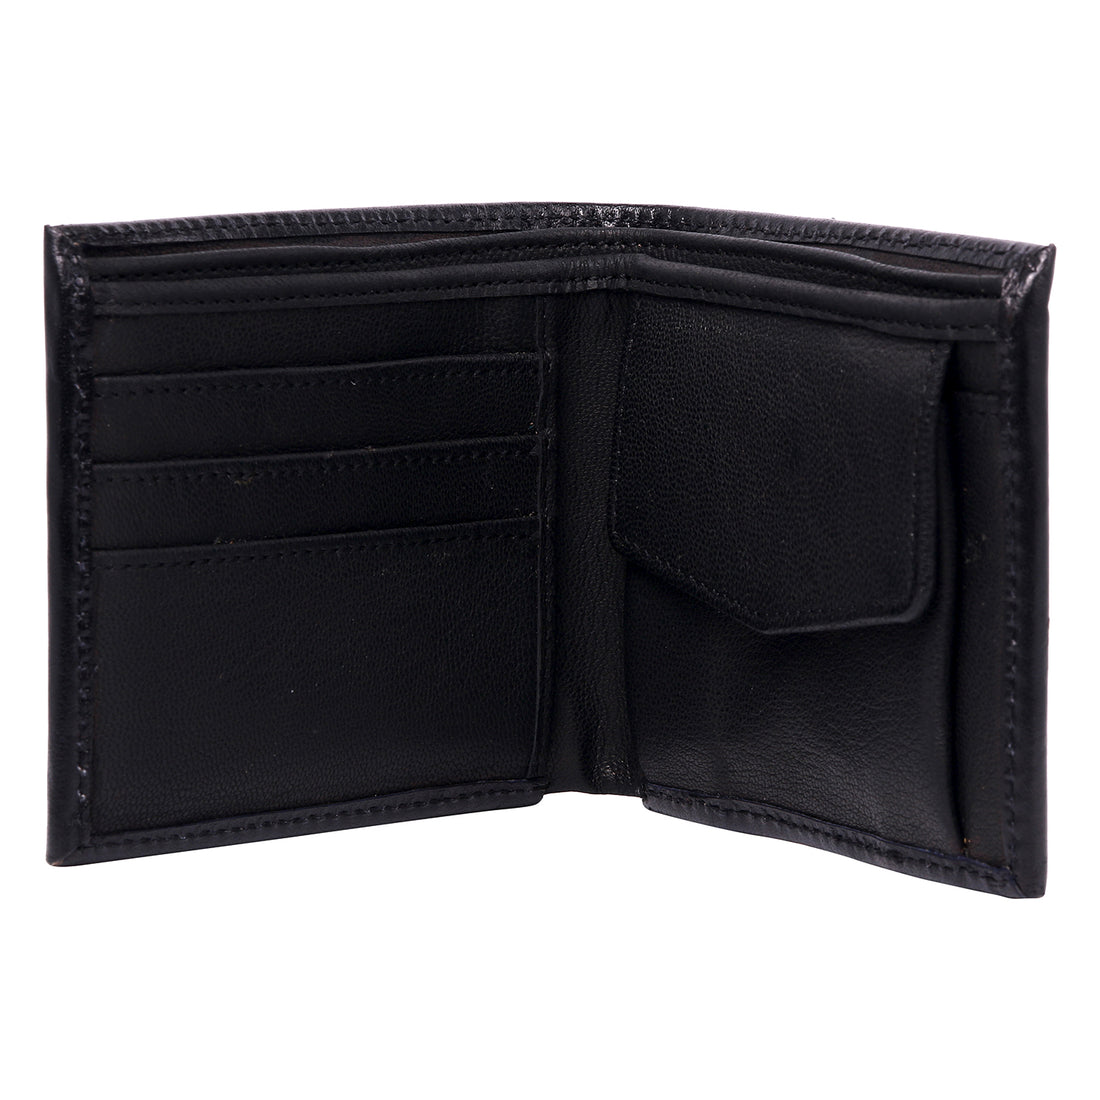 Hemener Men Black Carved Genuine Leather Wallet